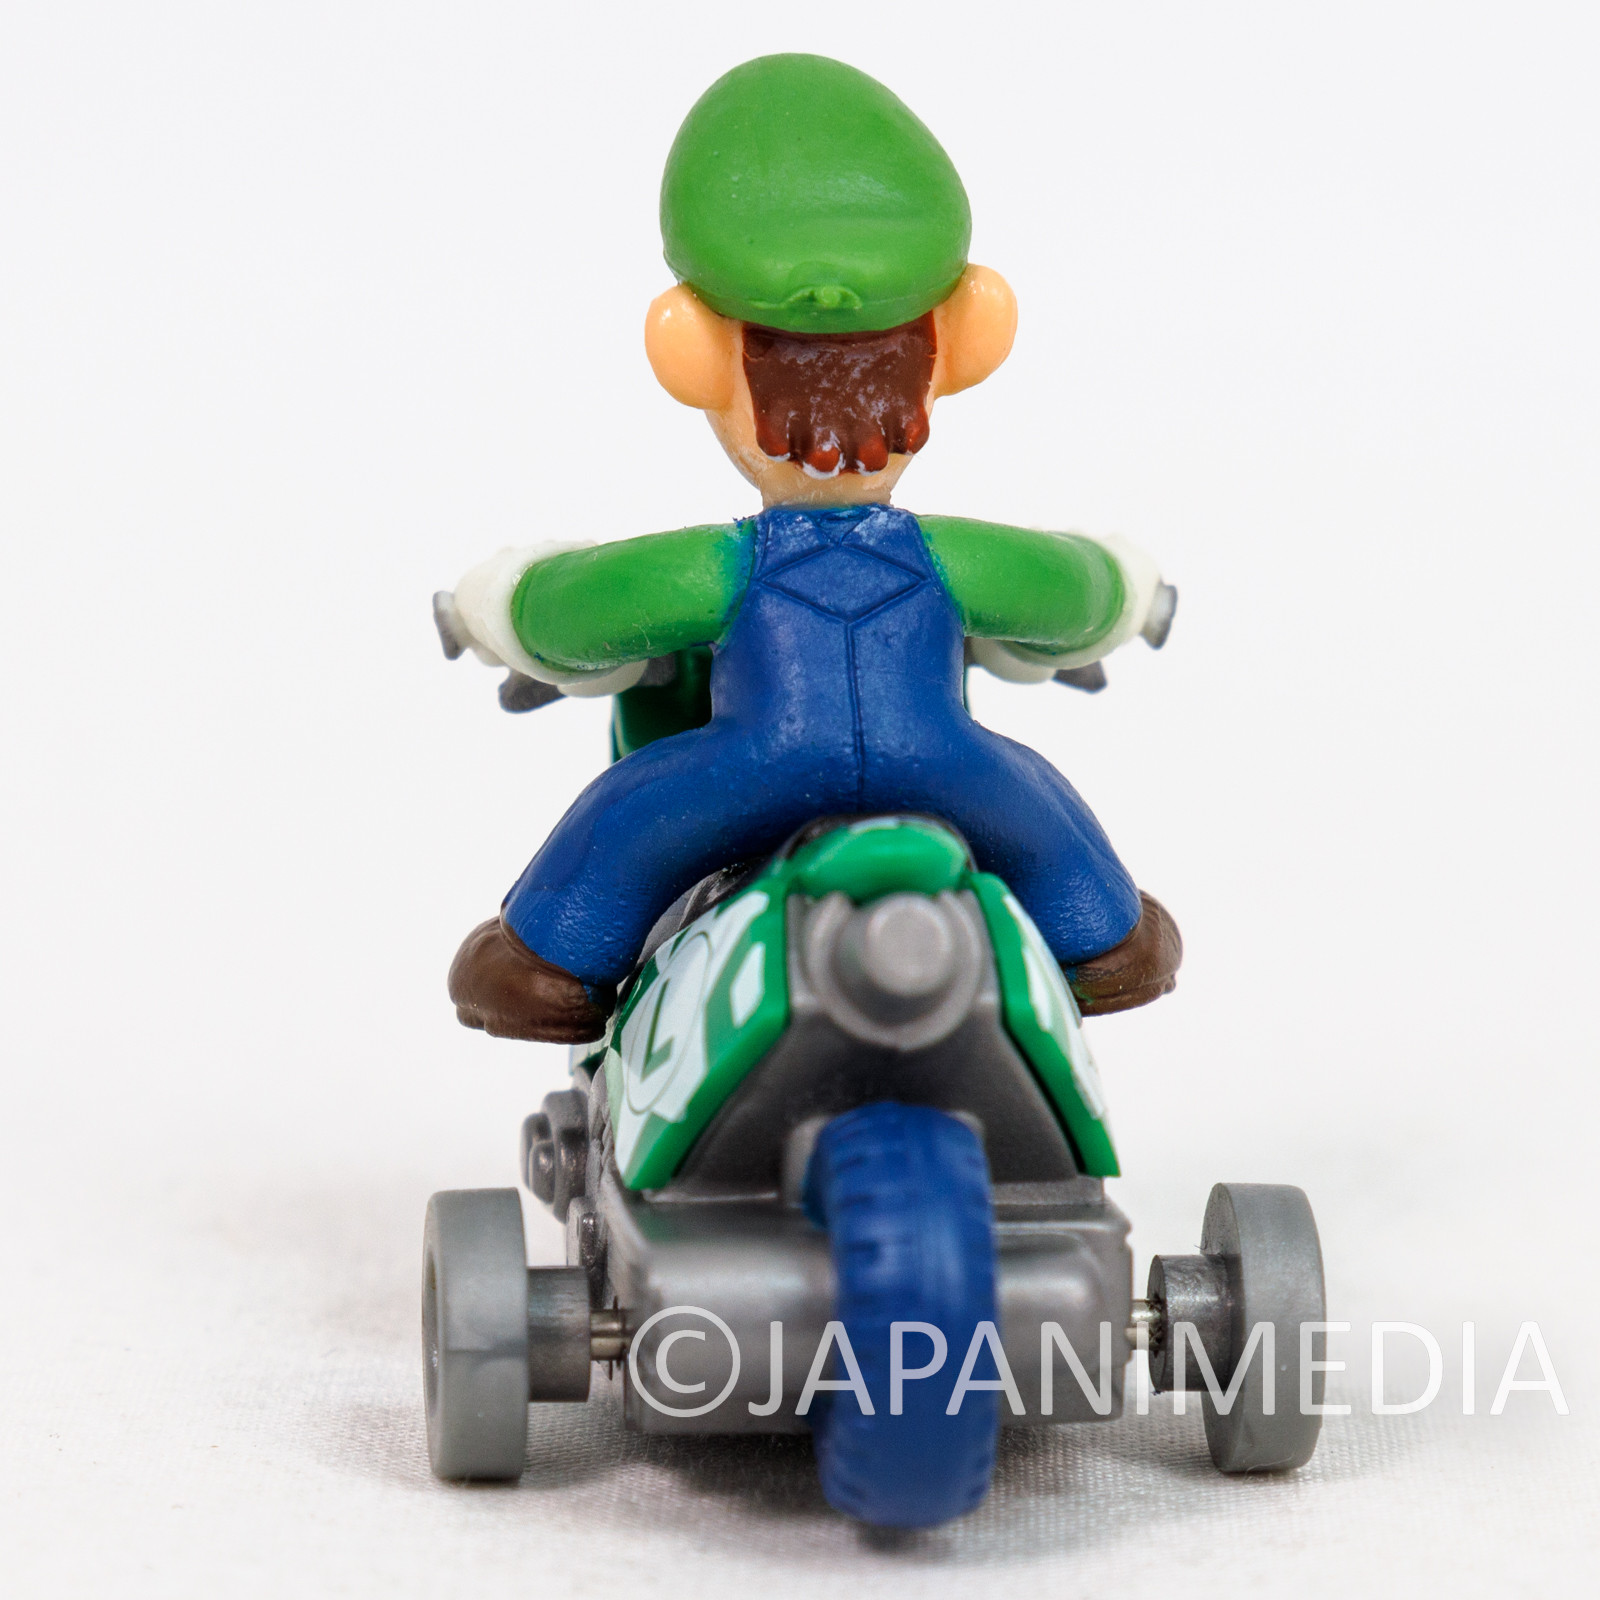 Super Mario Kart Wii LUIGE Mini Figure Pull Back Car Bike JAPAN NINTENDO